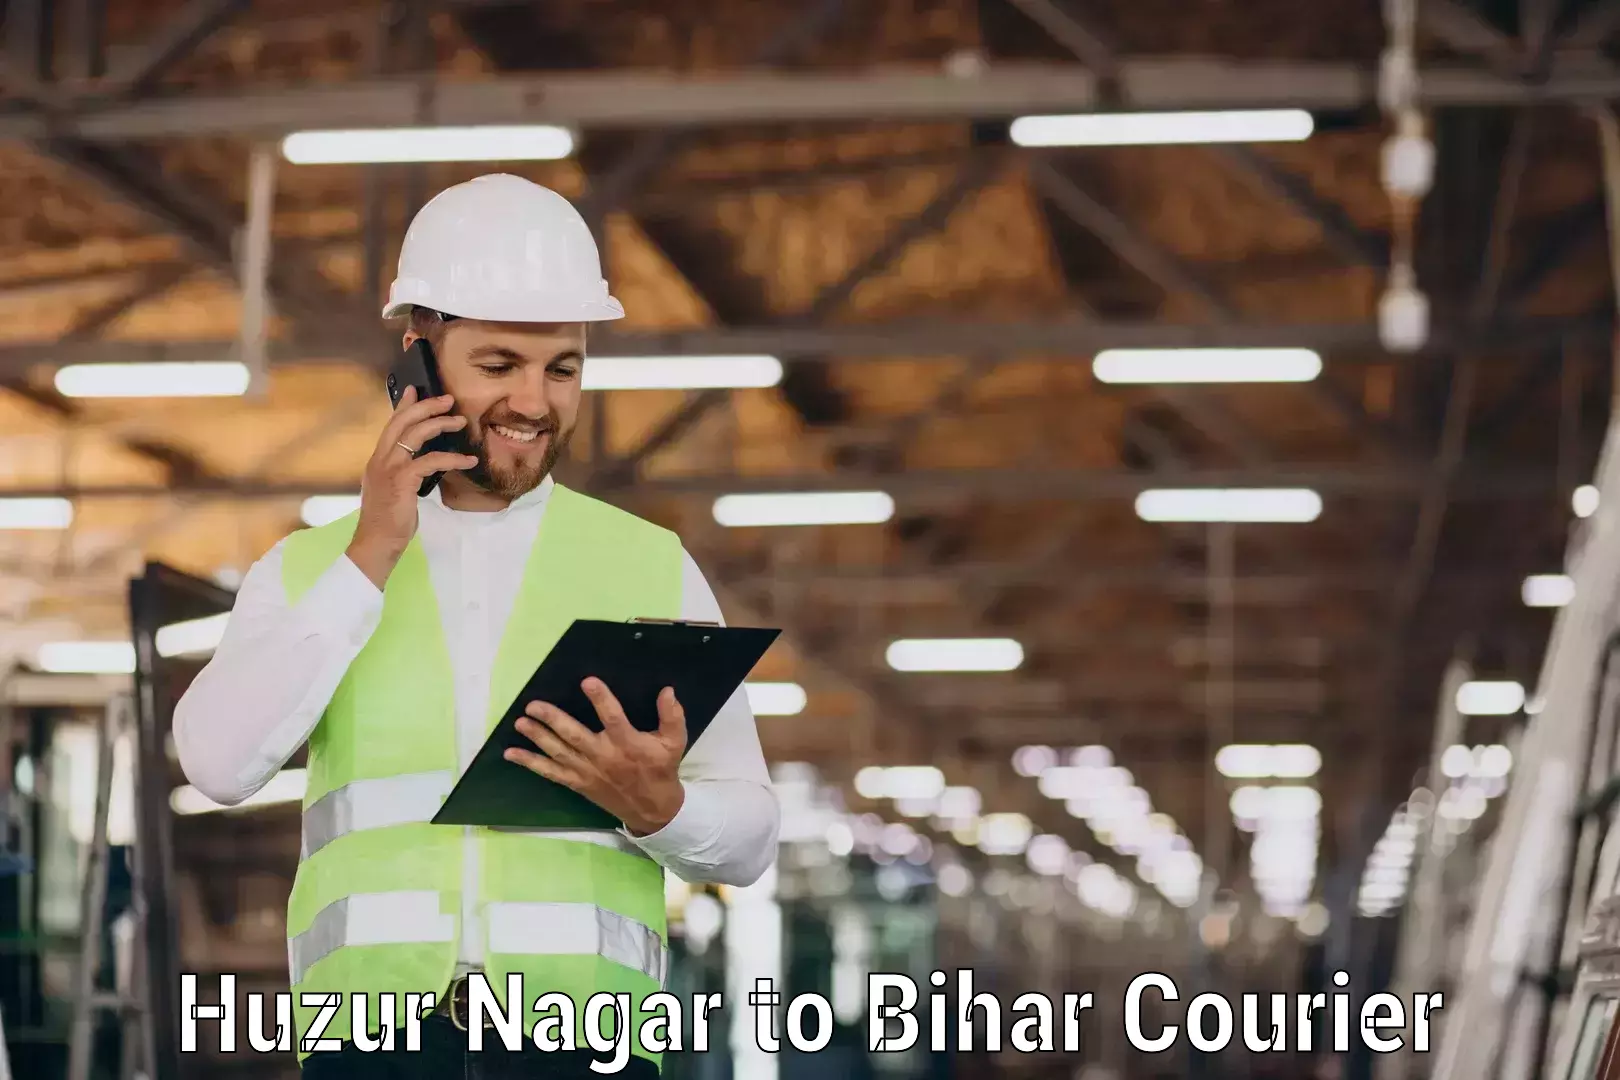 Courier service partnerships Huzur Nagar to Kochas